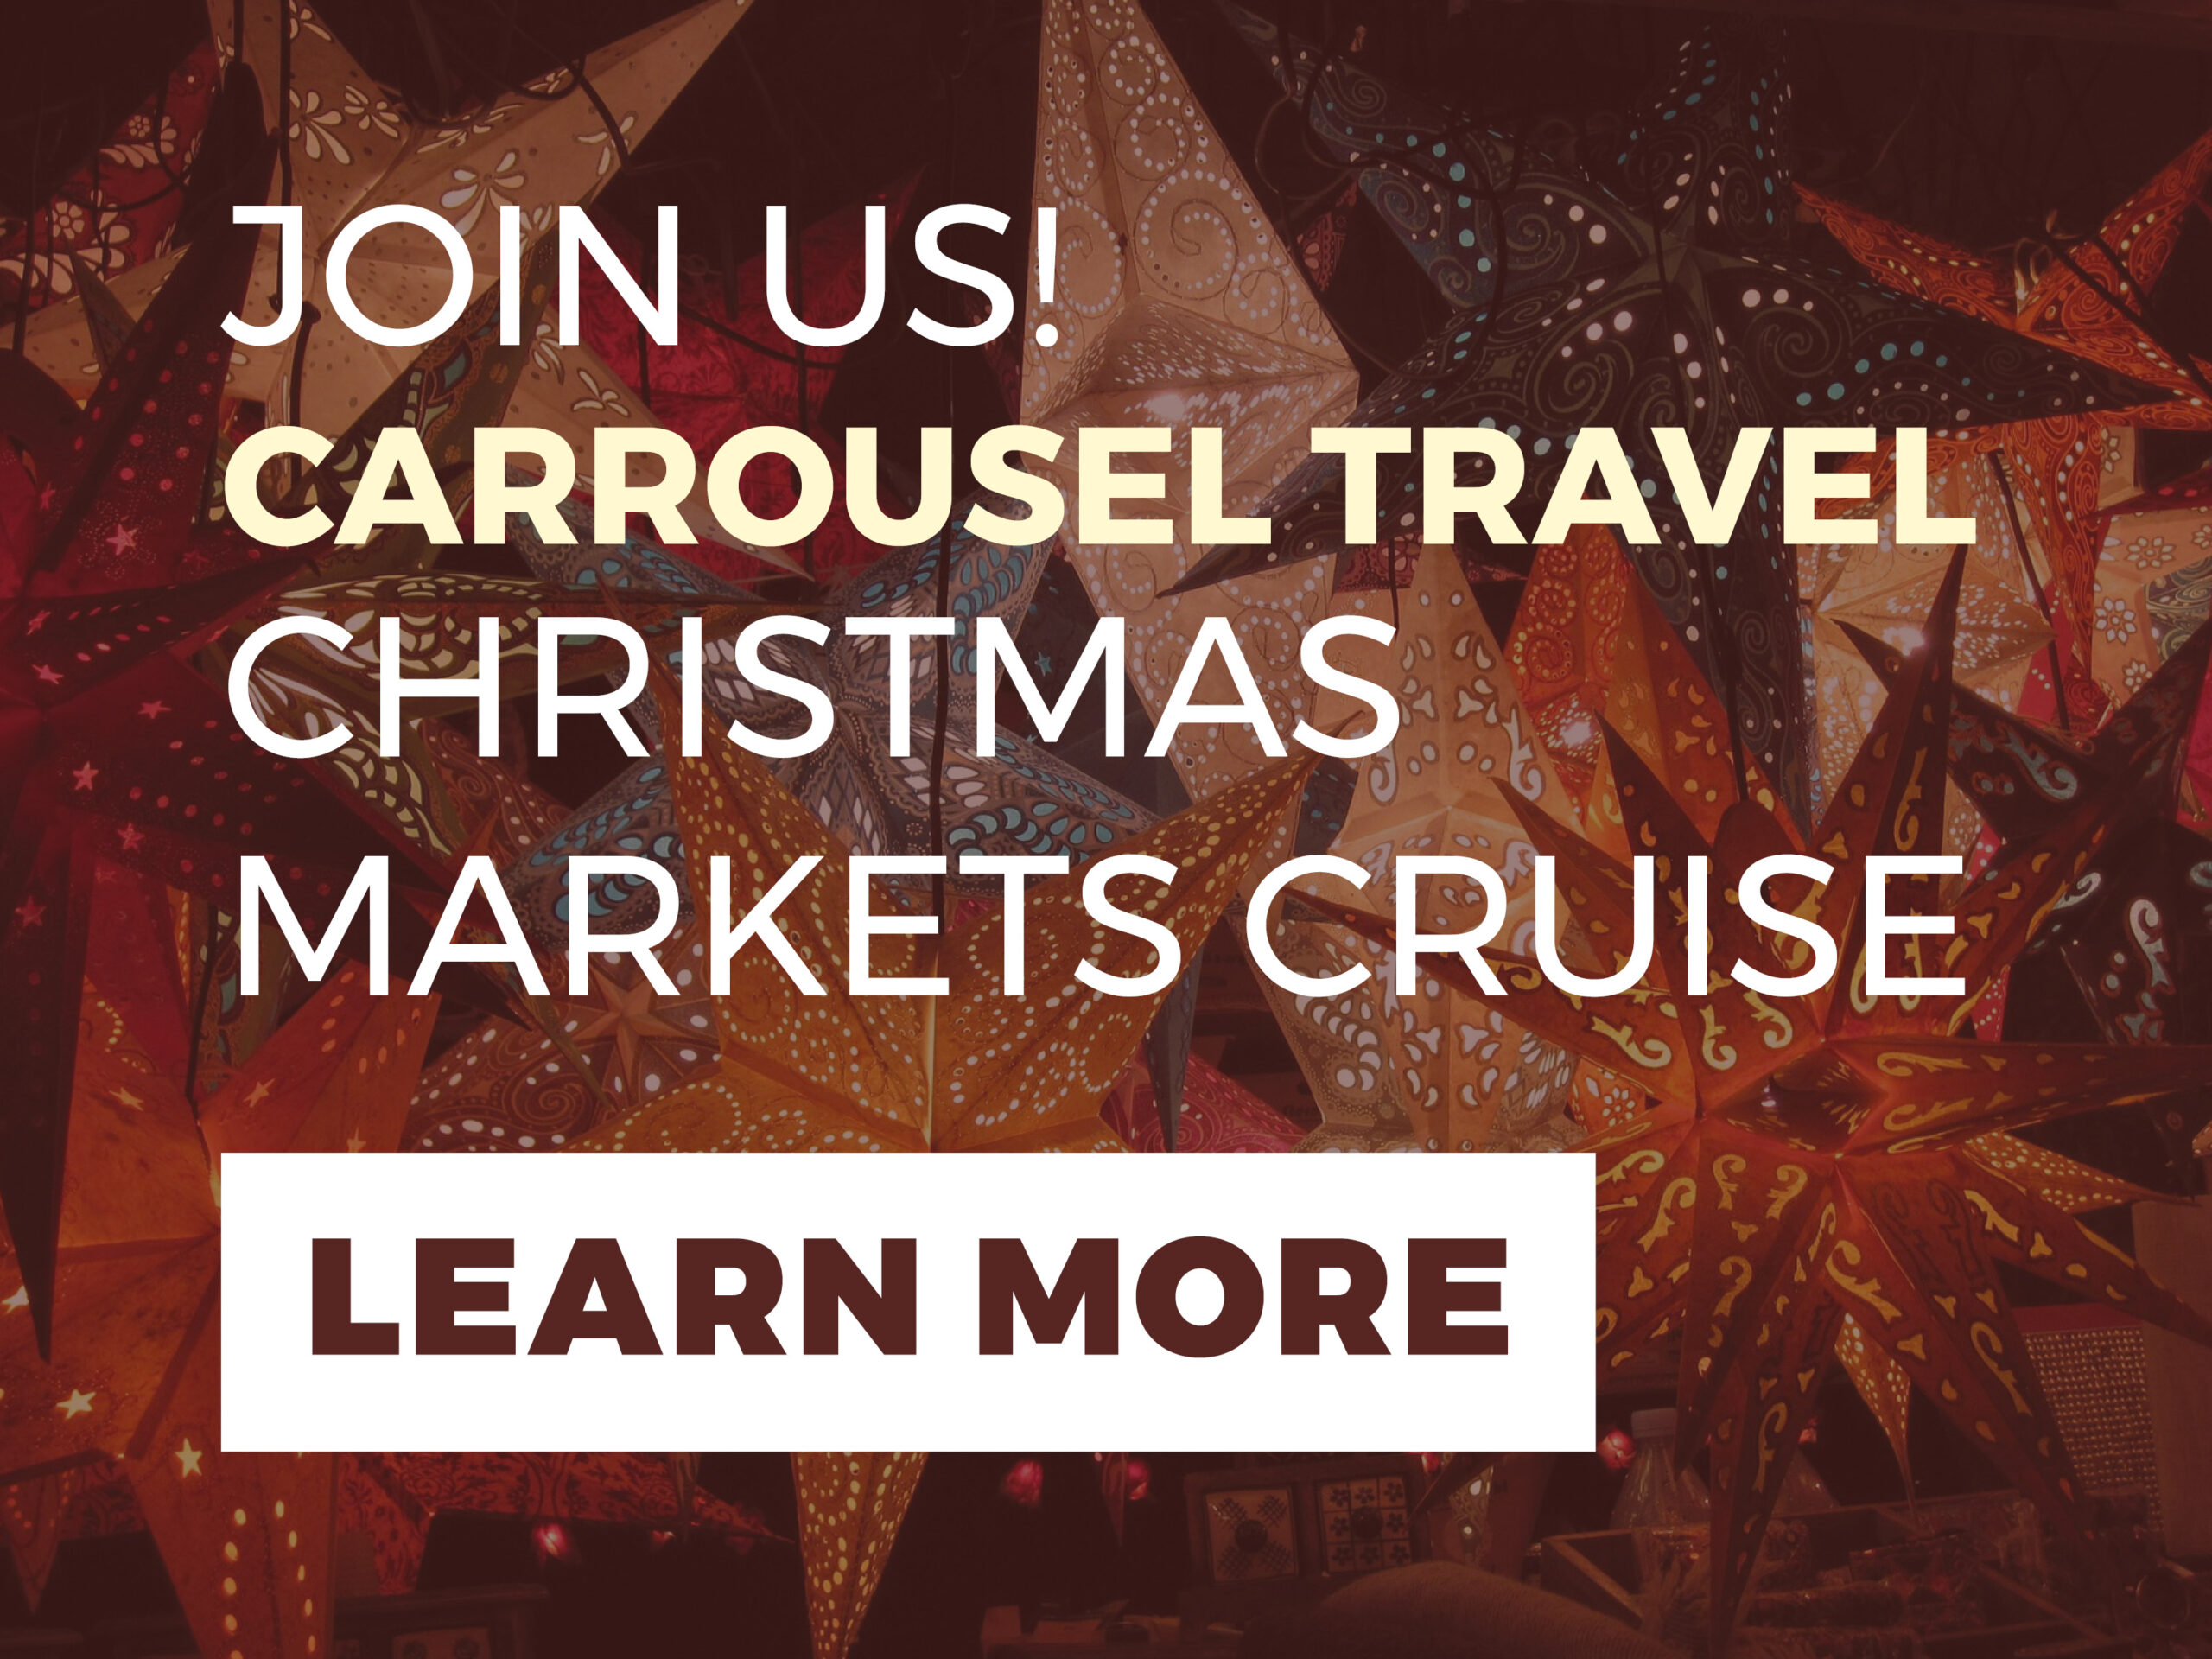 Carrousel Christmas Markets Cruise Learn More